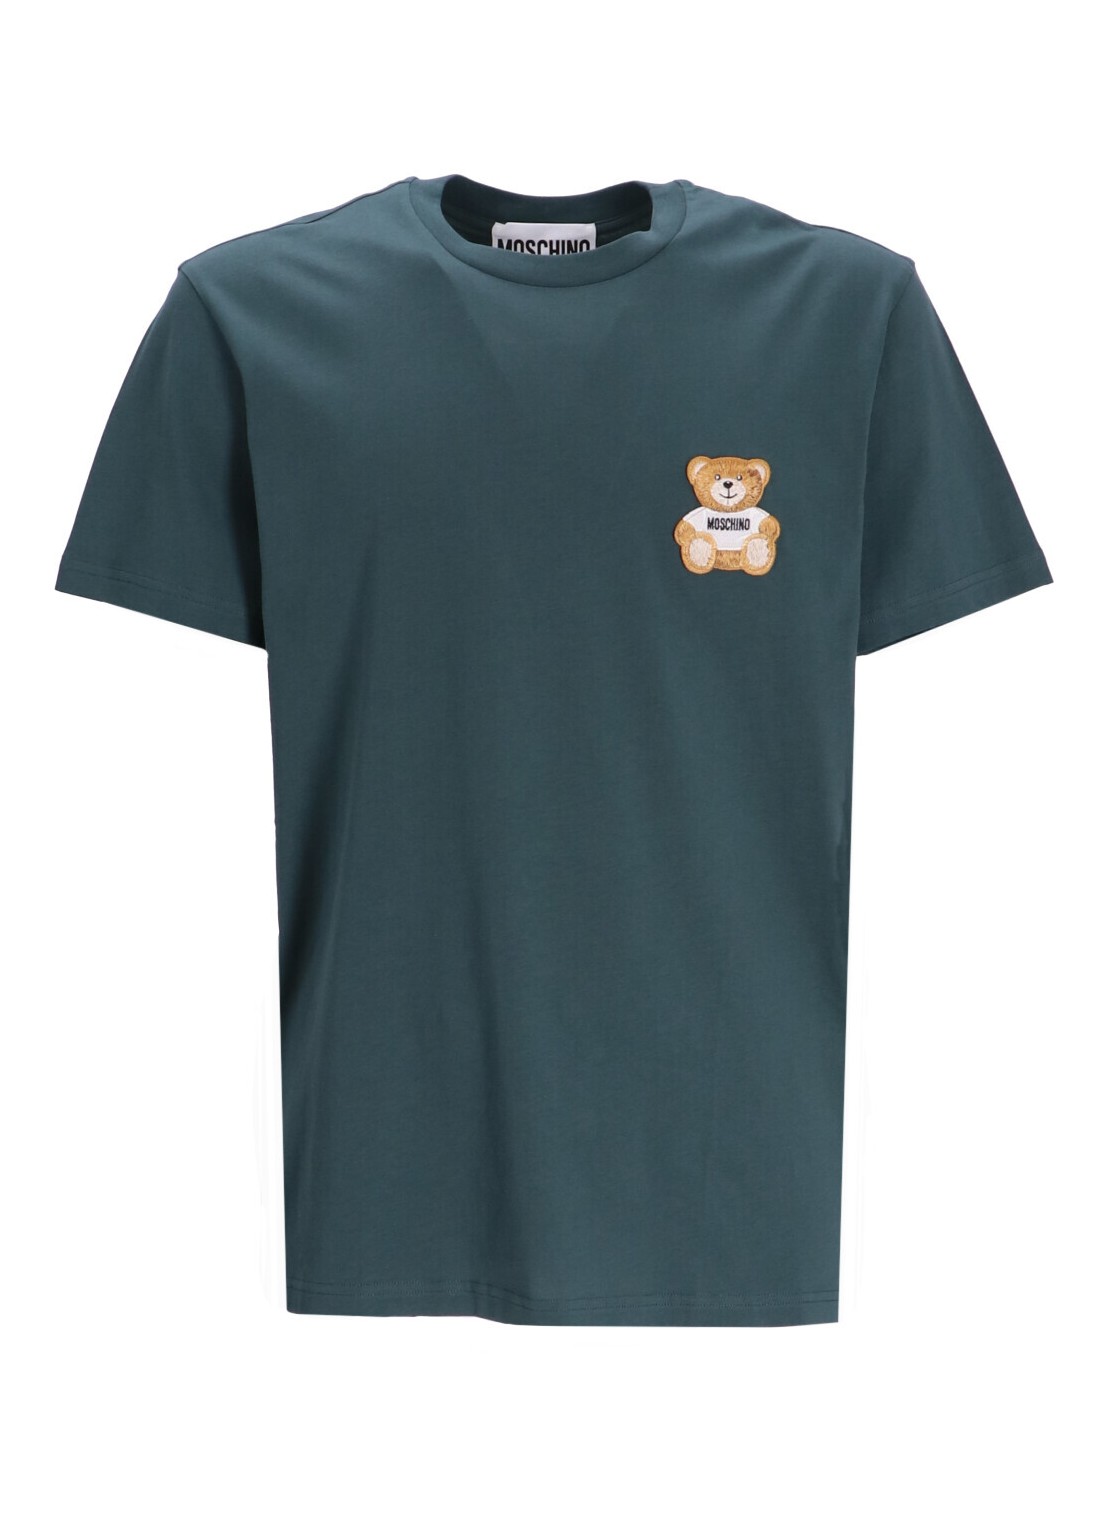 Camiseta moschino couture t-shirt man t-shirt 07232041 v0441 talla 46
 